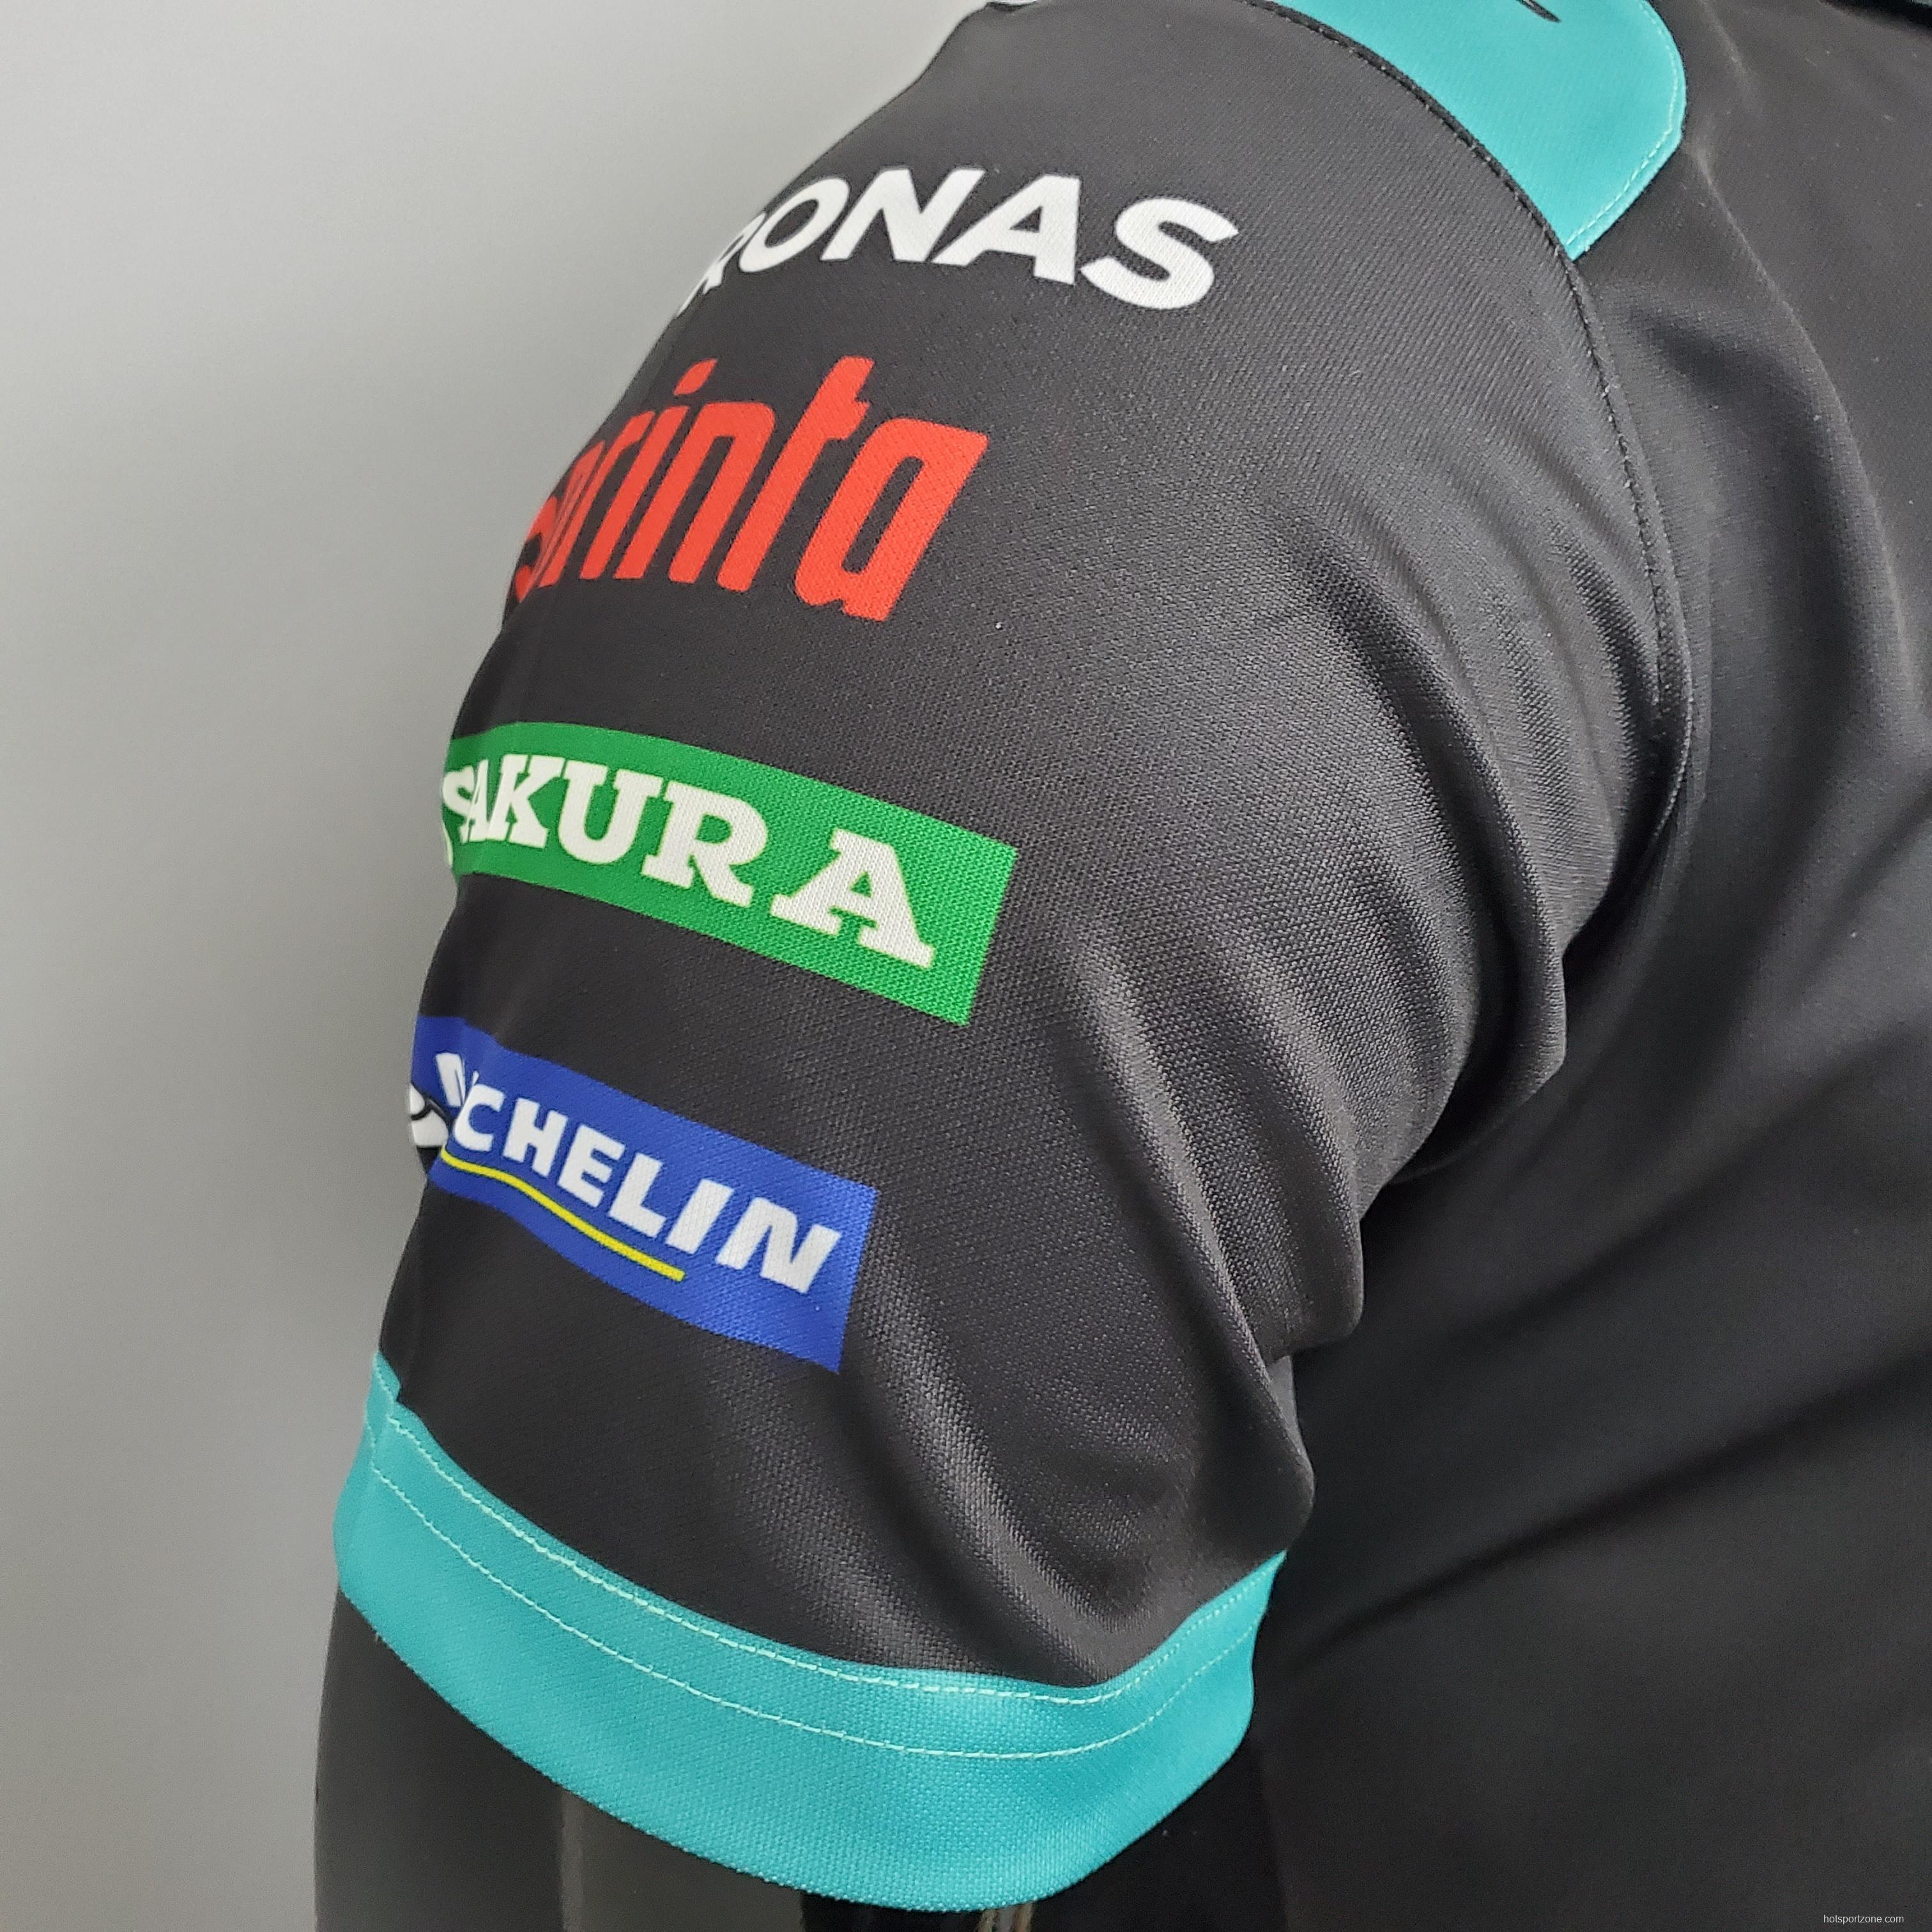 F1 Formula One Yamaha Racing Suit Black S-5XL